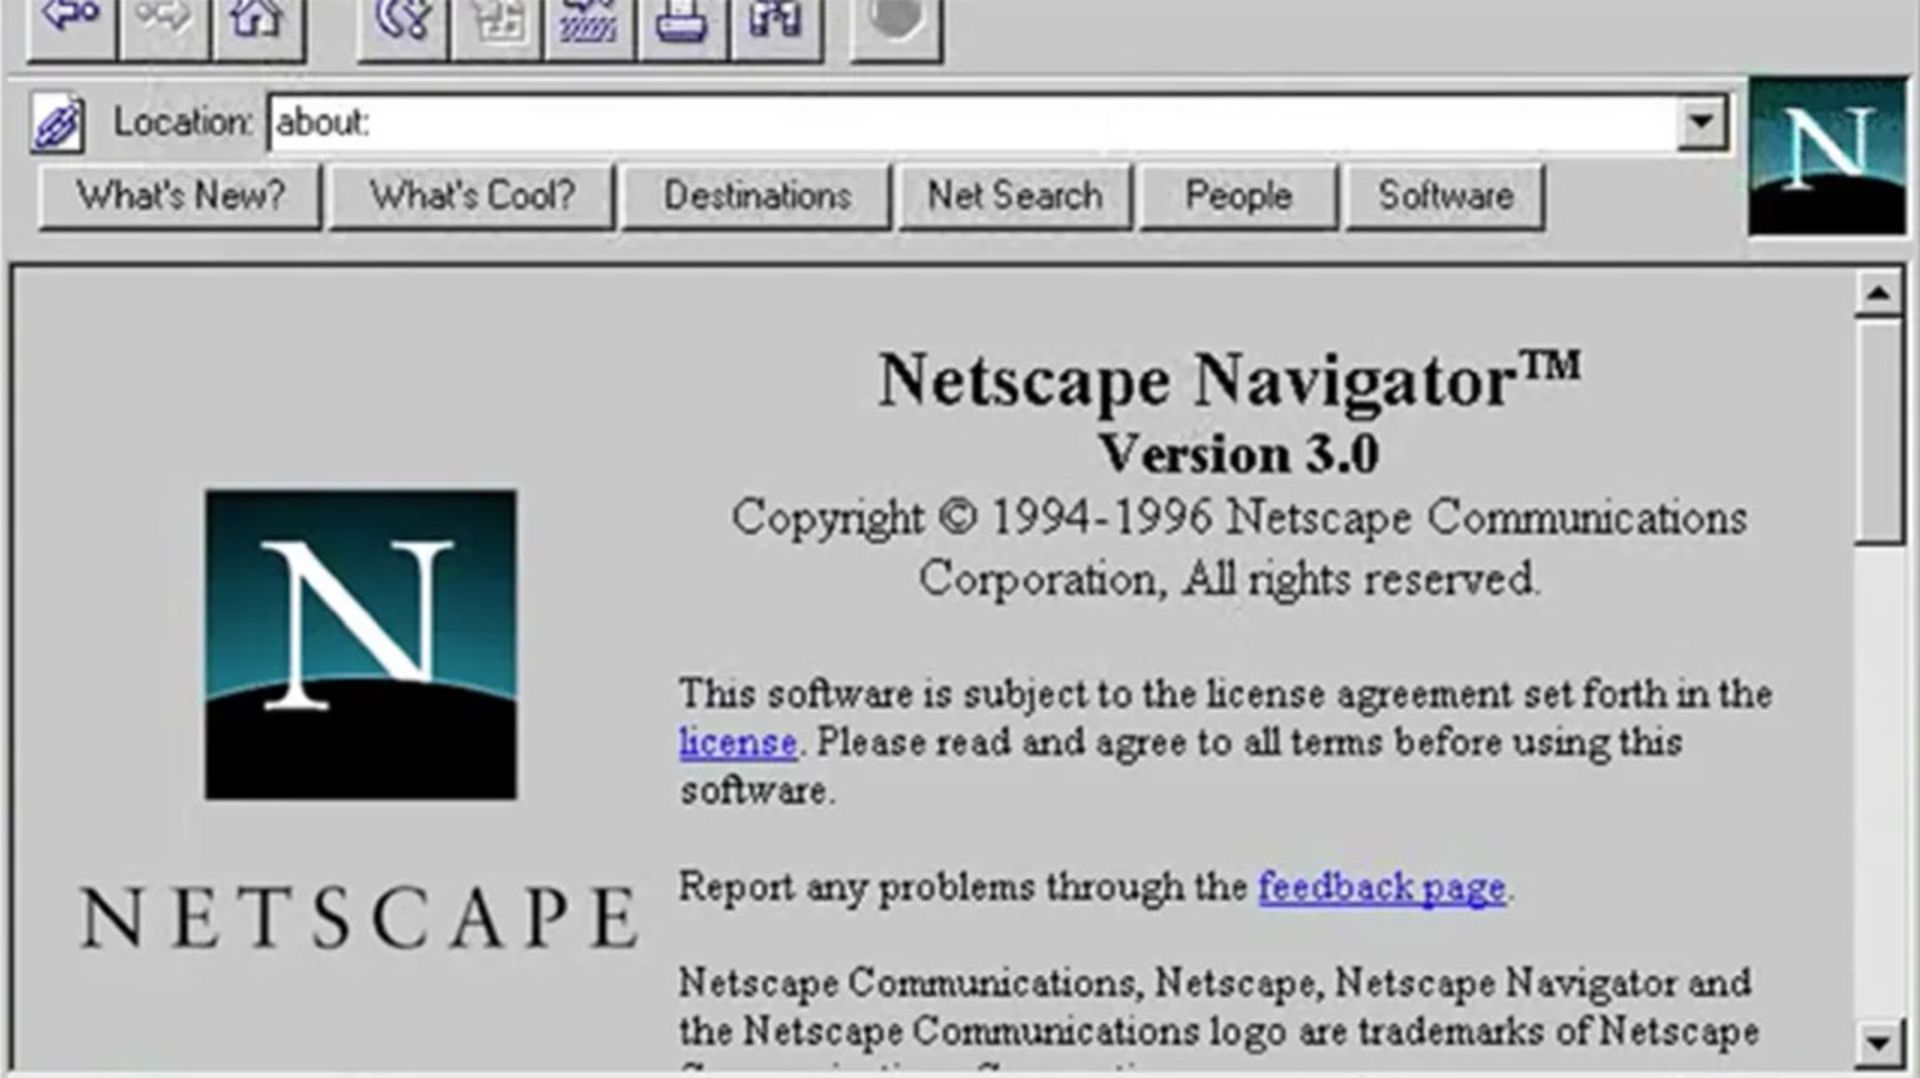 نت اسکیپ نویگیتور / Netscape Navigator